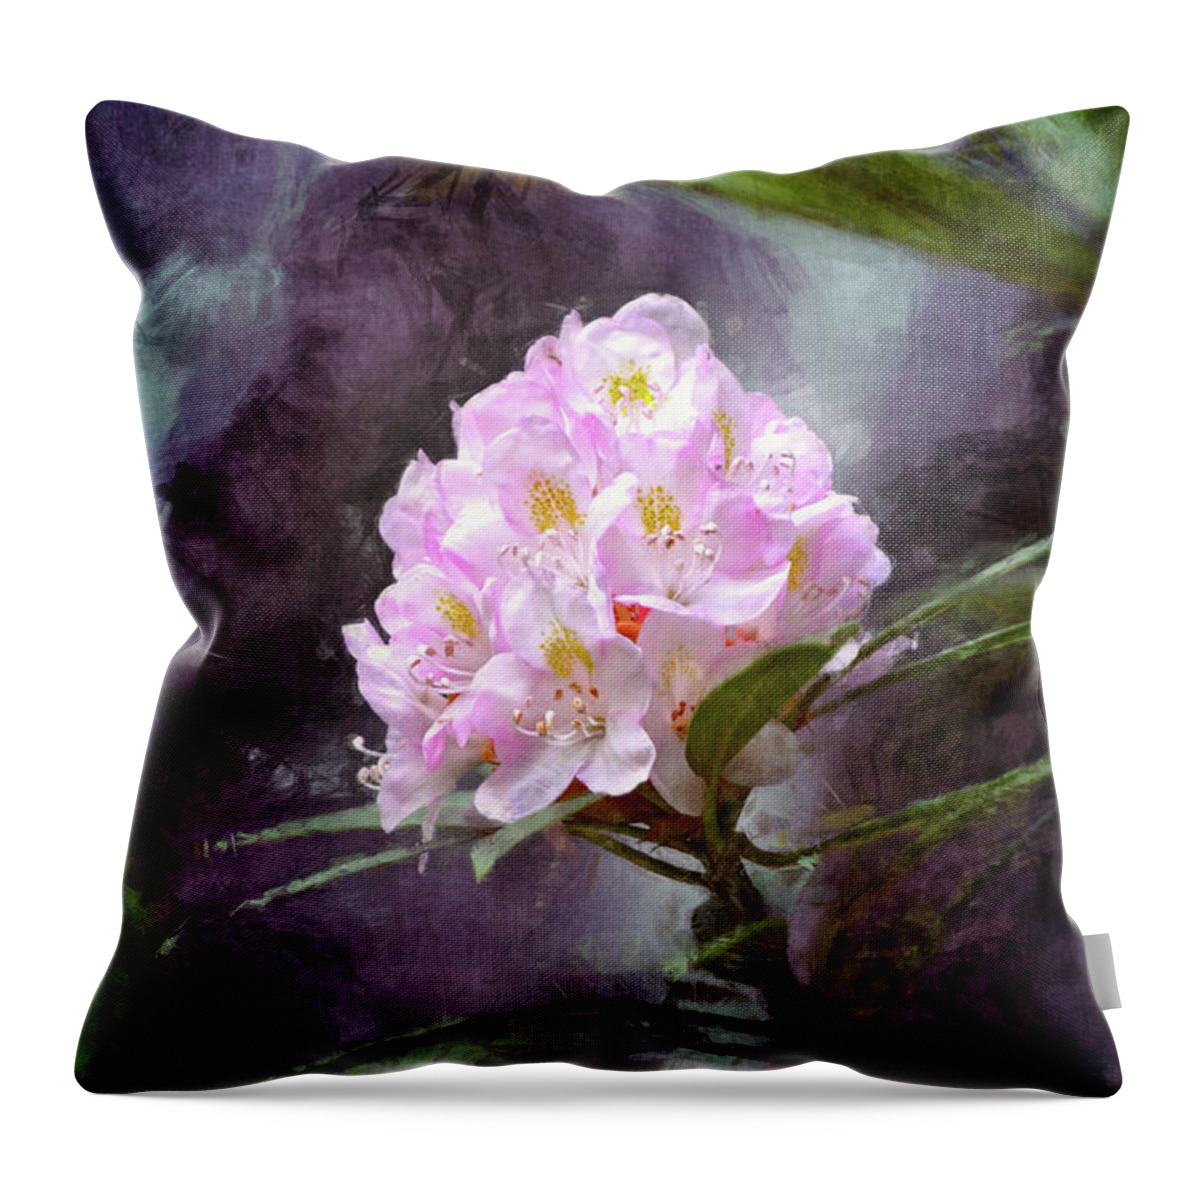 Flower Throw Pillow featuring the digital art Beautiful Flower by Phil Perkins